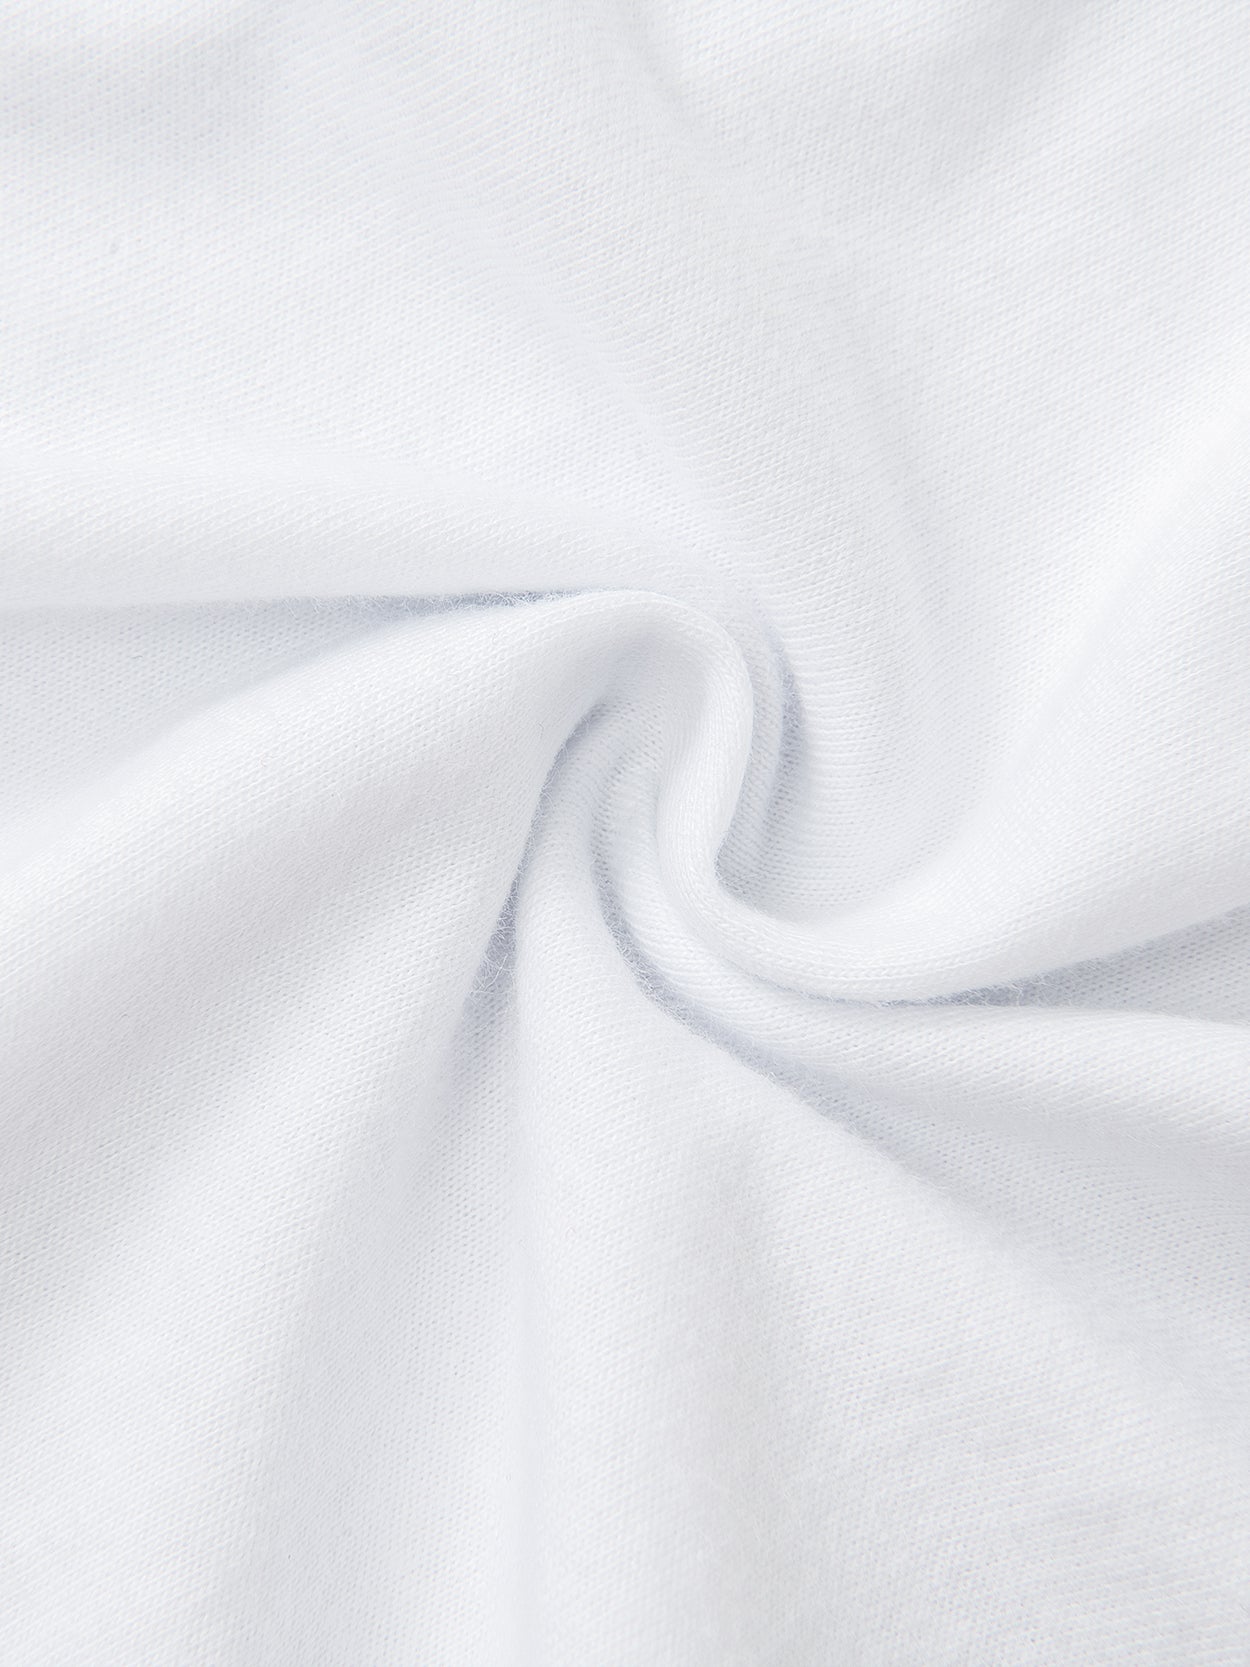 Cotton High-Cut Brief Plus Size Underwear White – WingsLove